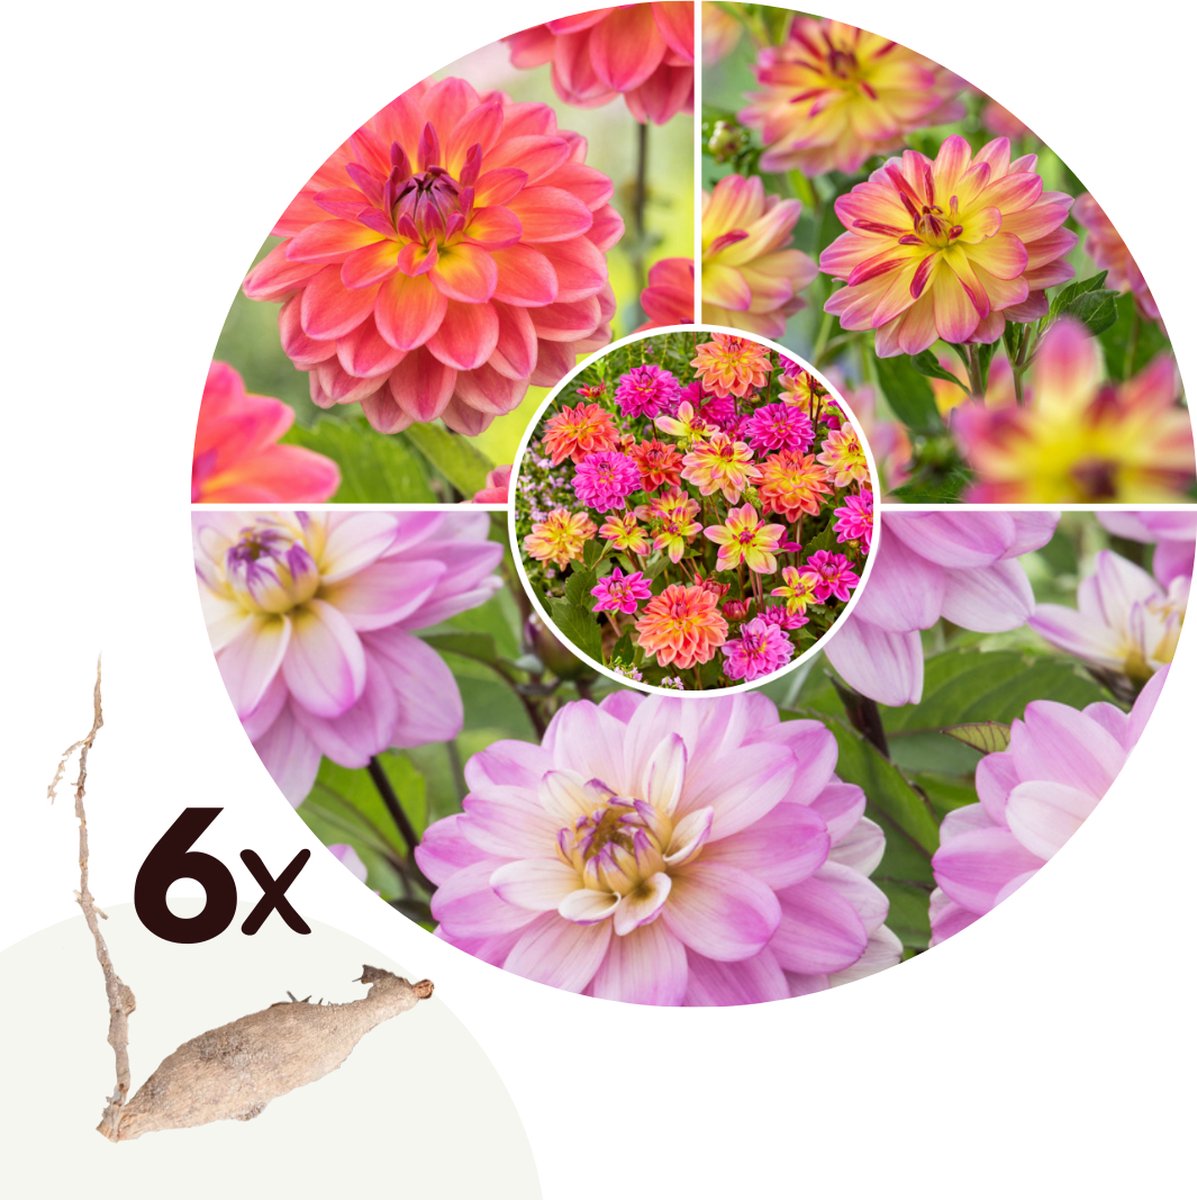 Plant in a Box - Dahlia Pacific Bulb Mix - Set van 6 - Dahlia knollen - Kleurrijke mix van verschillende opvallende dahlia bloemen.